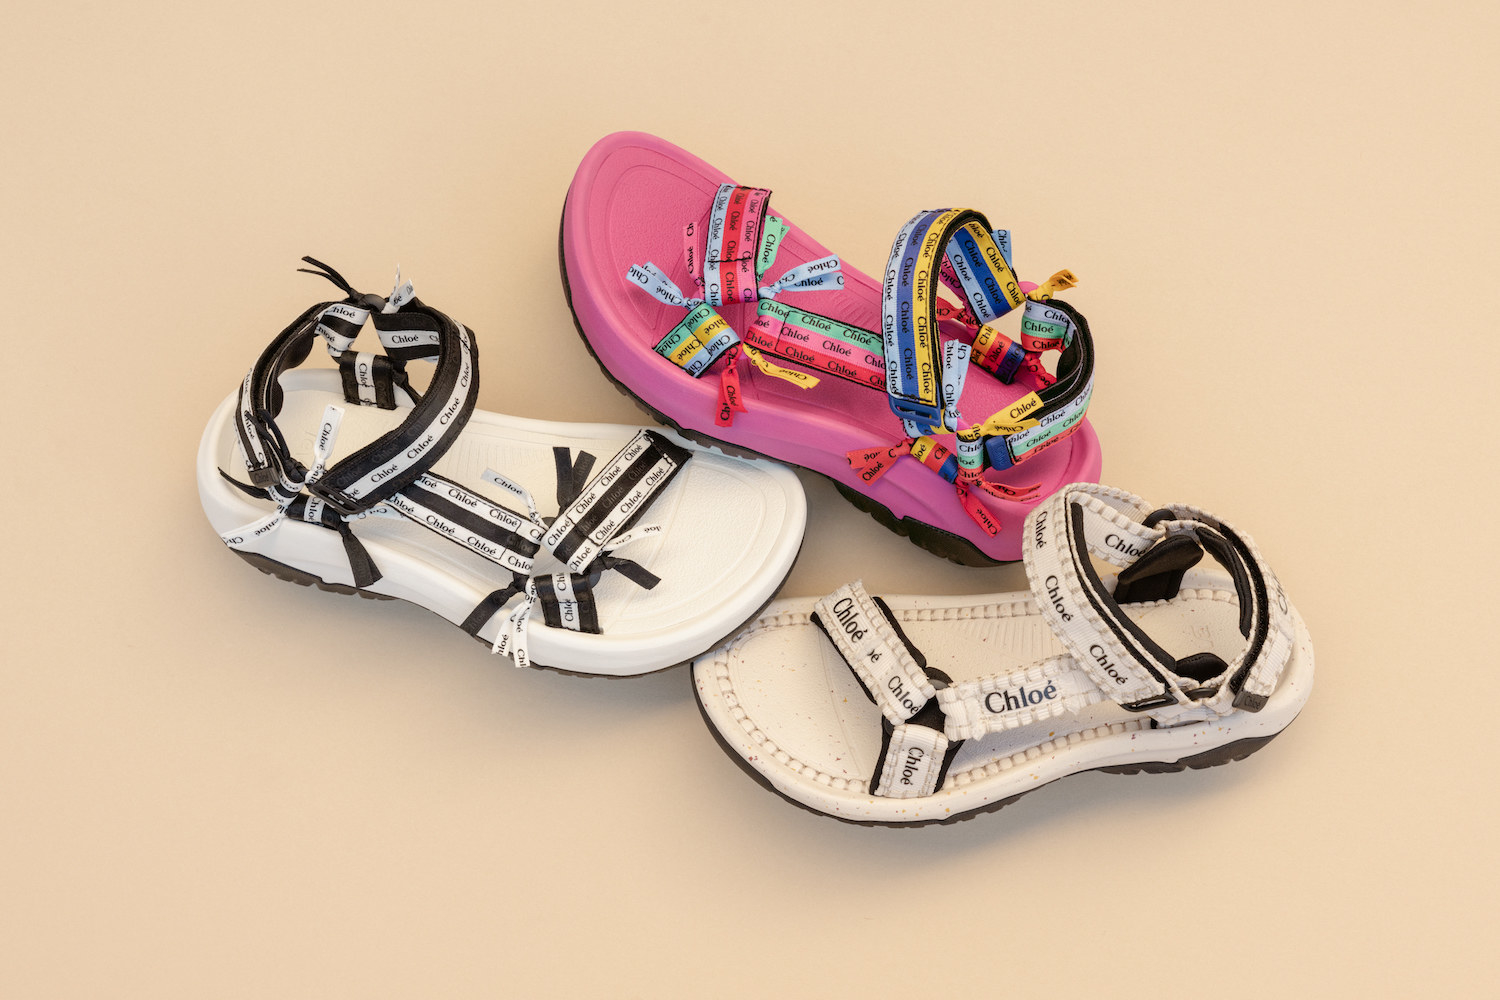 Chloé x Teva Sandals Product Shots